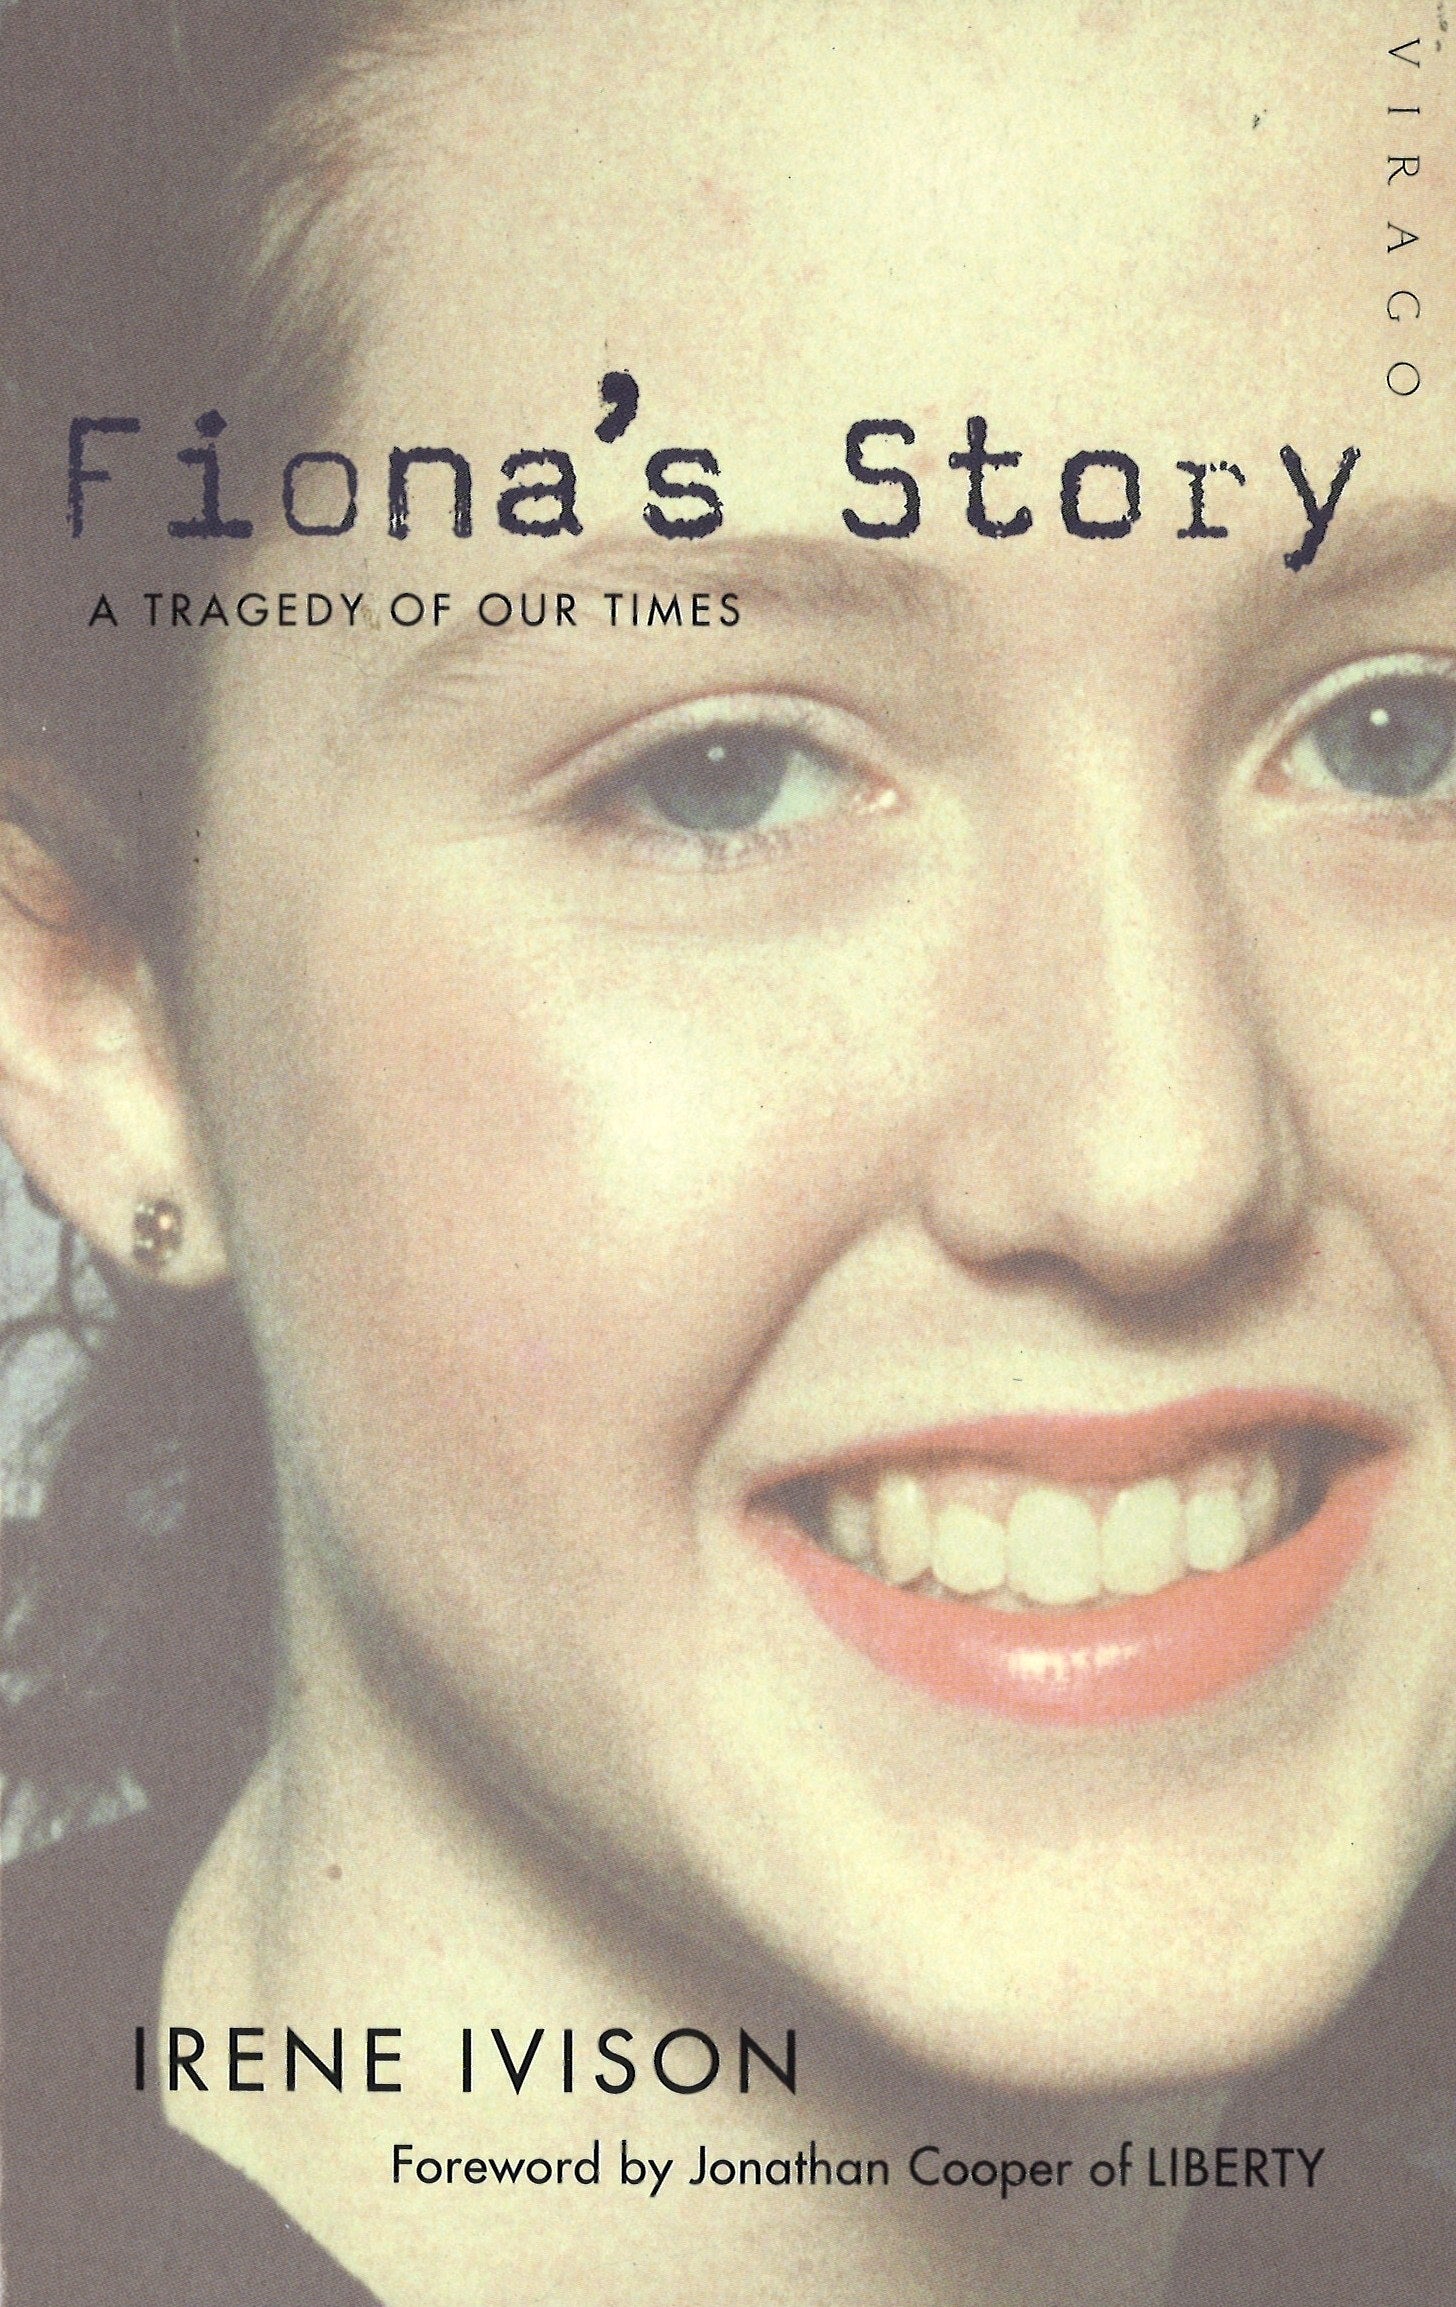 Fiona's Story by Irene Ivison